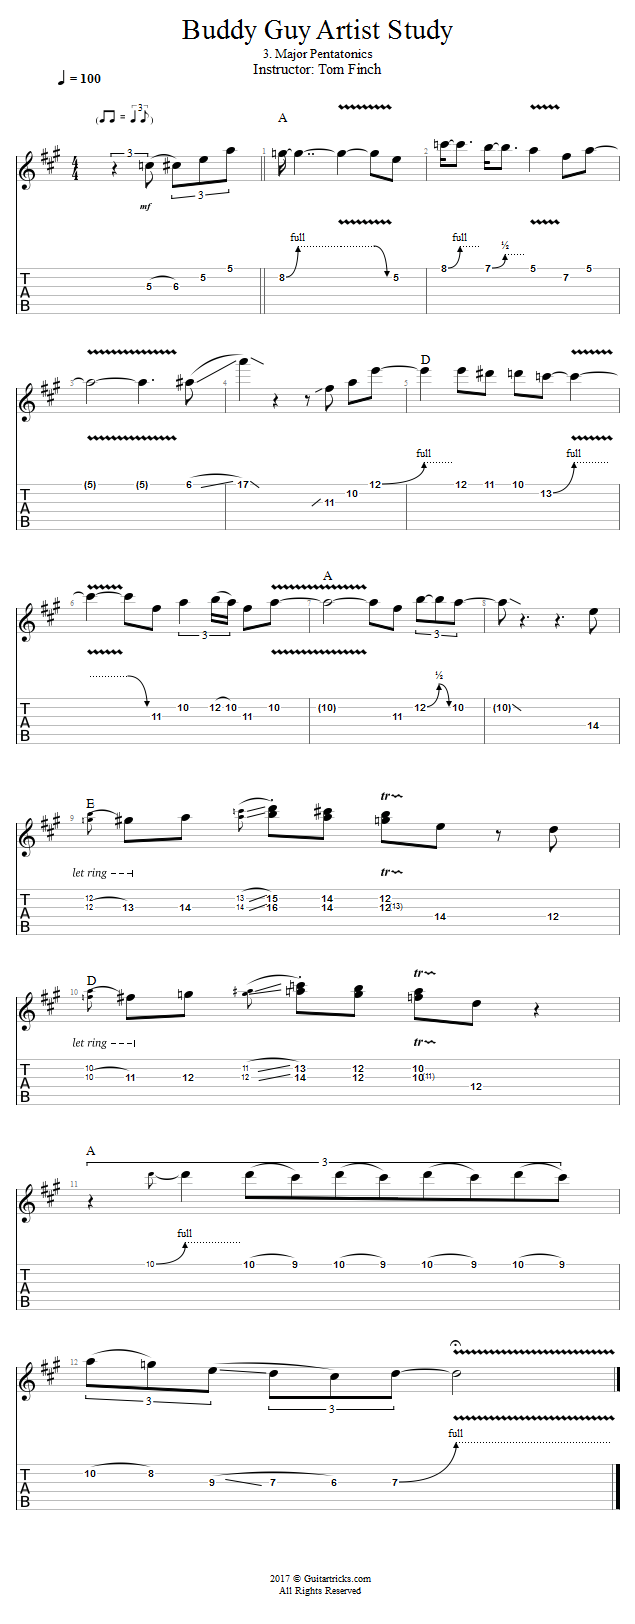 Major Pentatonics song notation